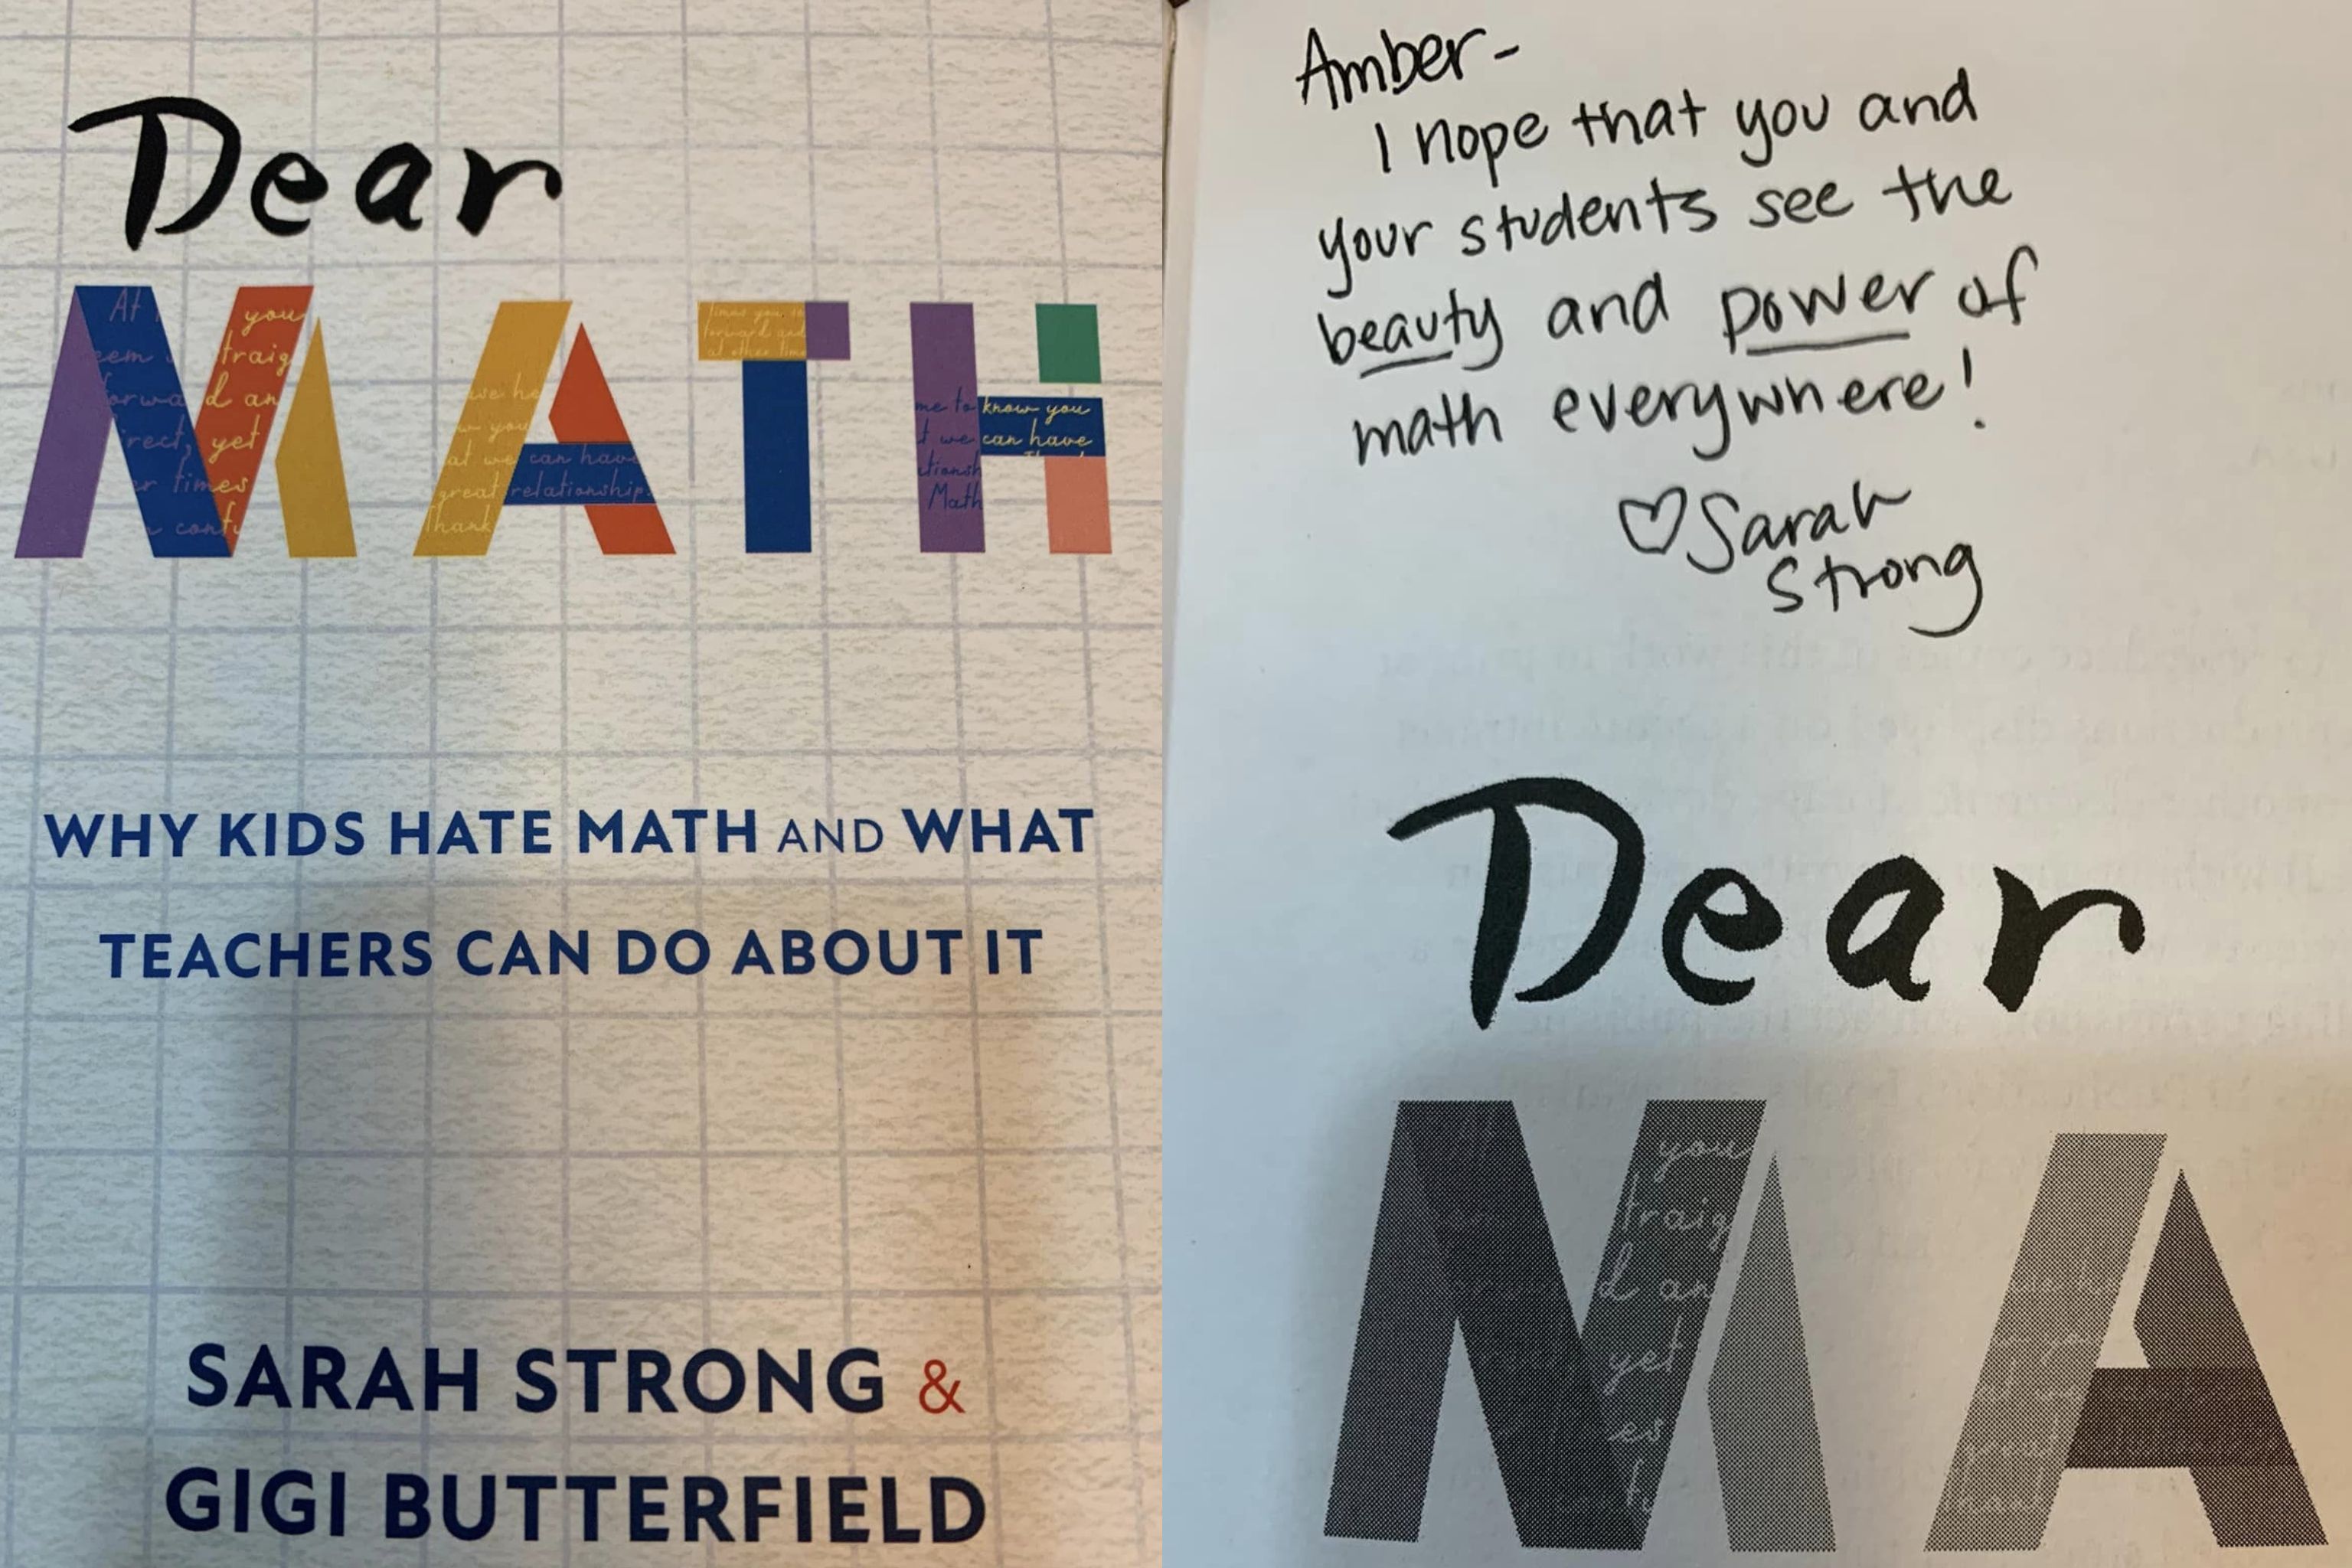 Sarah Strong 老師跟學生 Gigi Butterfield 所共同著作的《Dear Math》一書，右為Sarah 老師的親簽與贈言。Amber Chang 提供